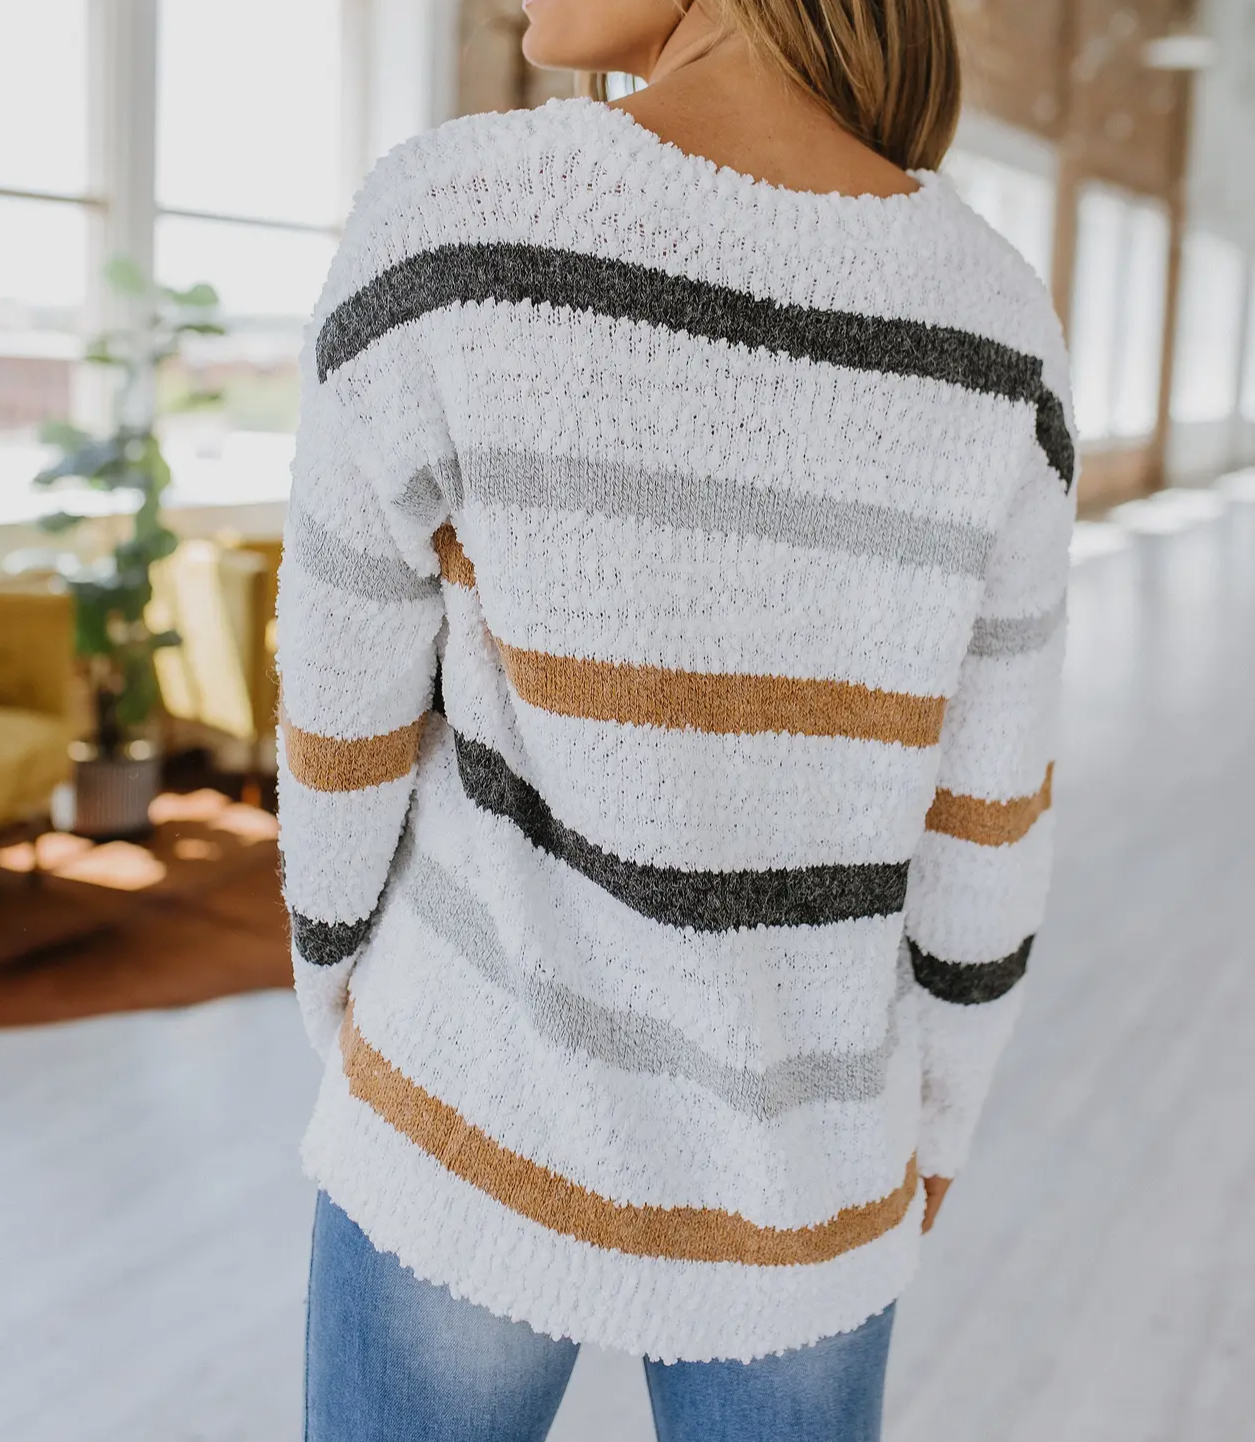 Striped Popcorn Sweater